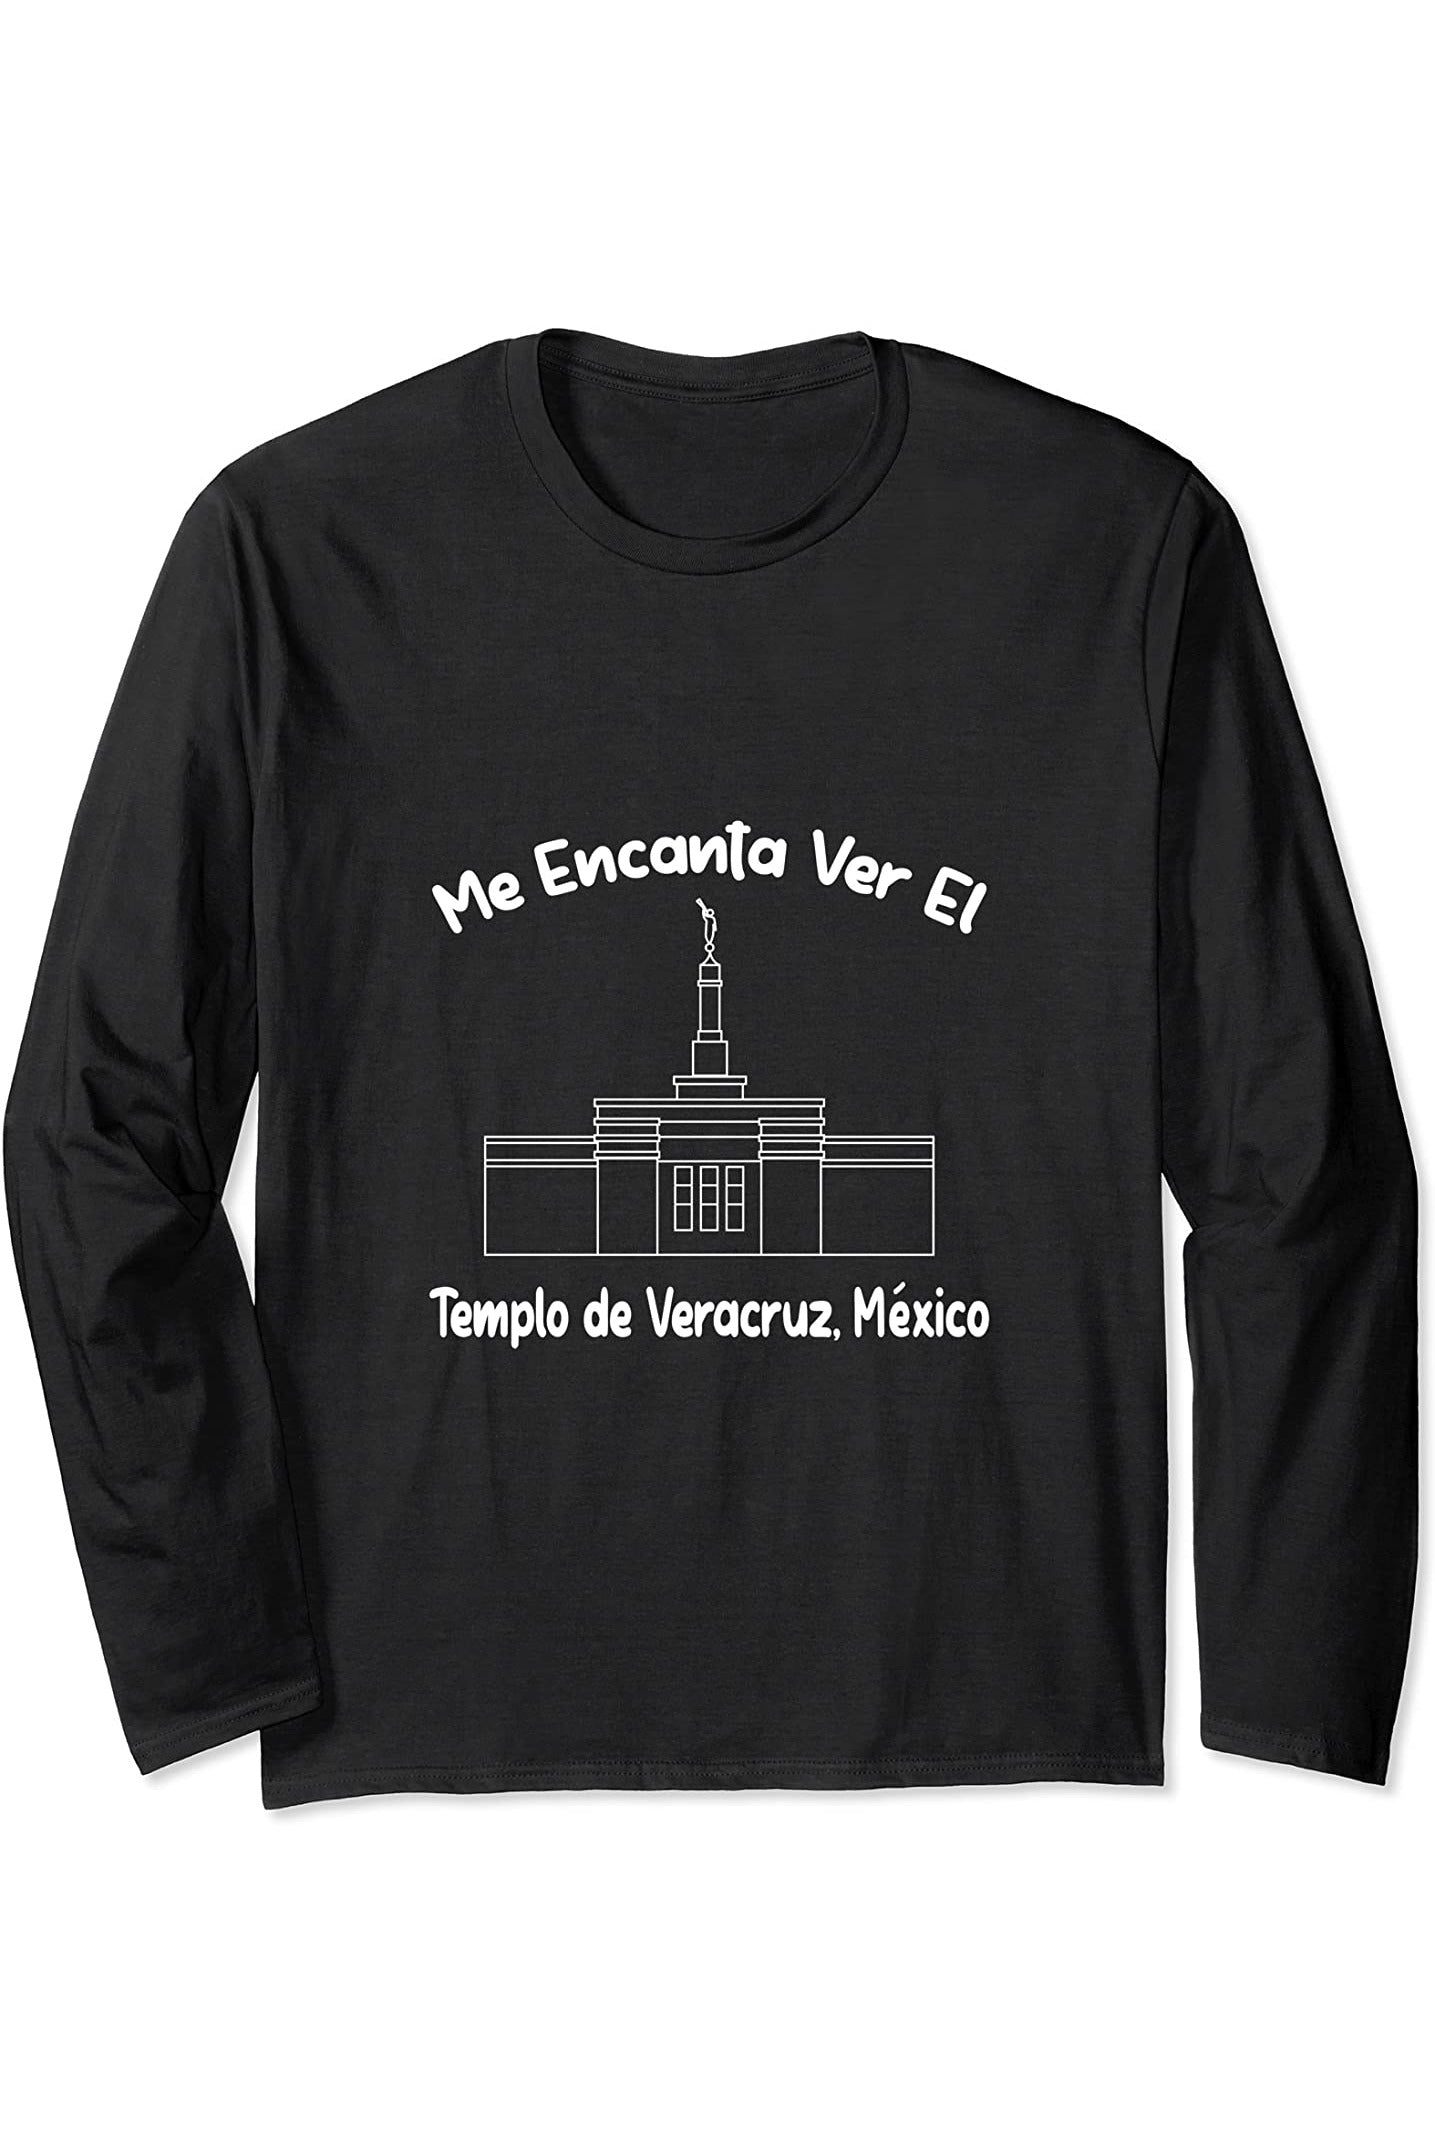 Veracruz Mexico Temple Long Sleeve T-Shirt - Primary Style (Spanish) US